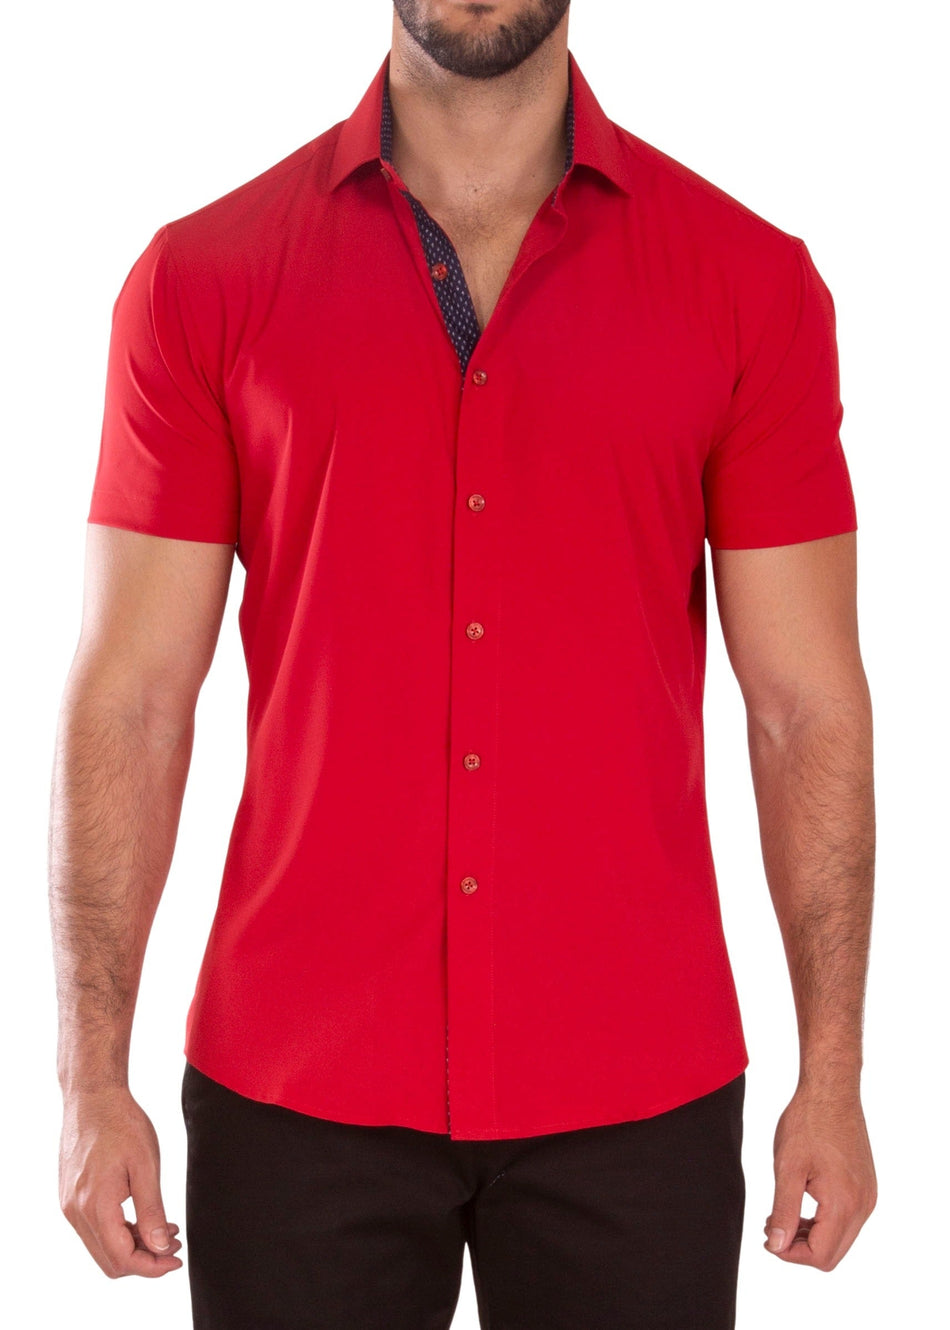 Performance Fit Short Sleeve Dress Shirt Red